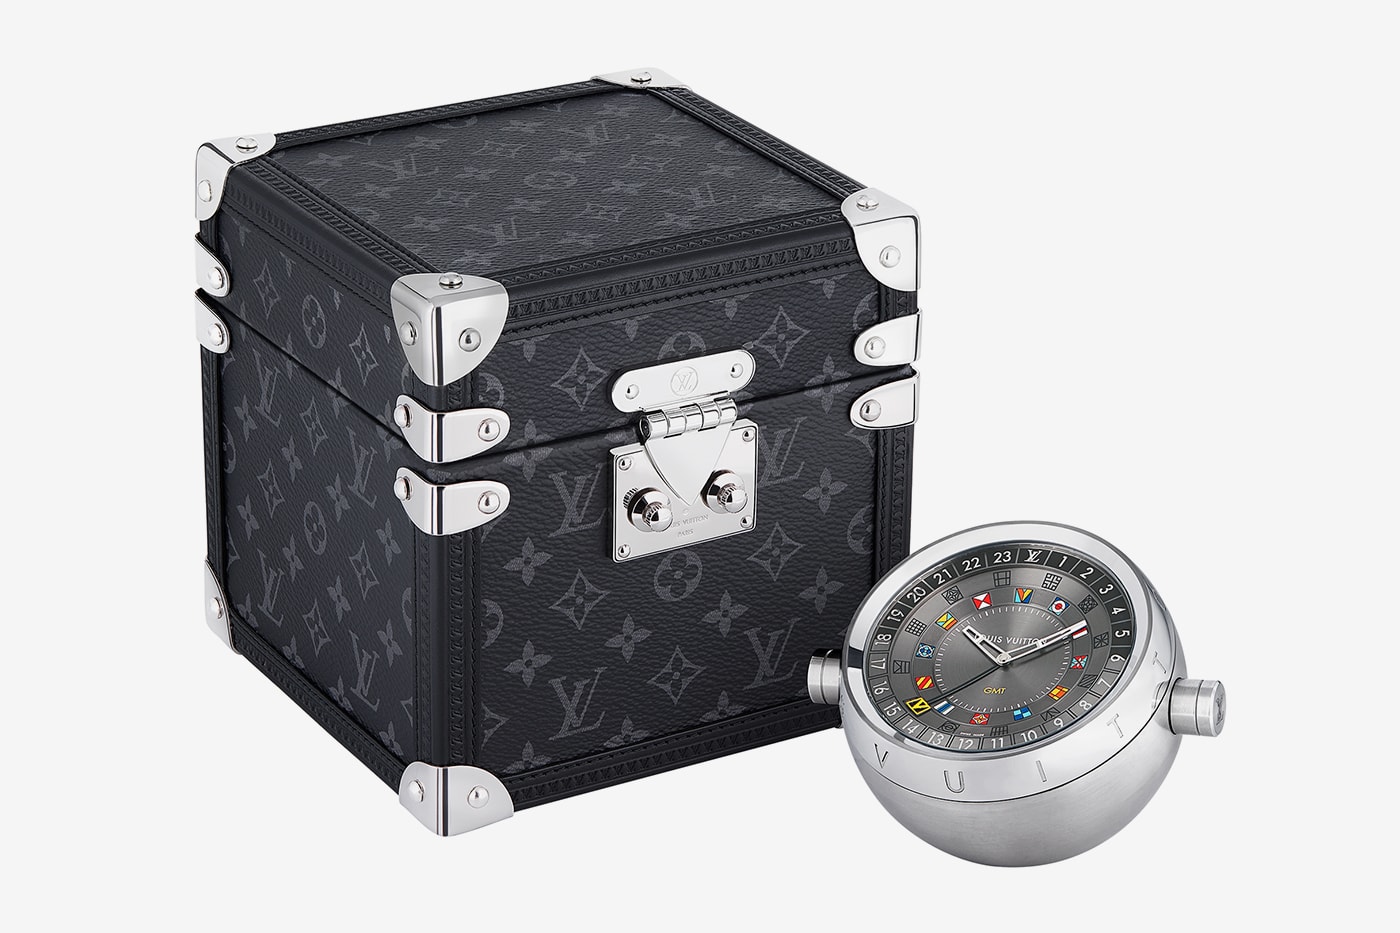 Louis Vuitton Trunk Table Clock Release